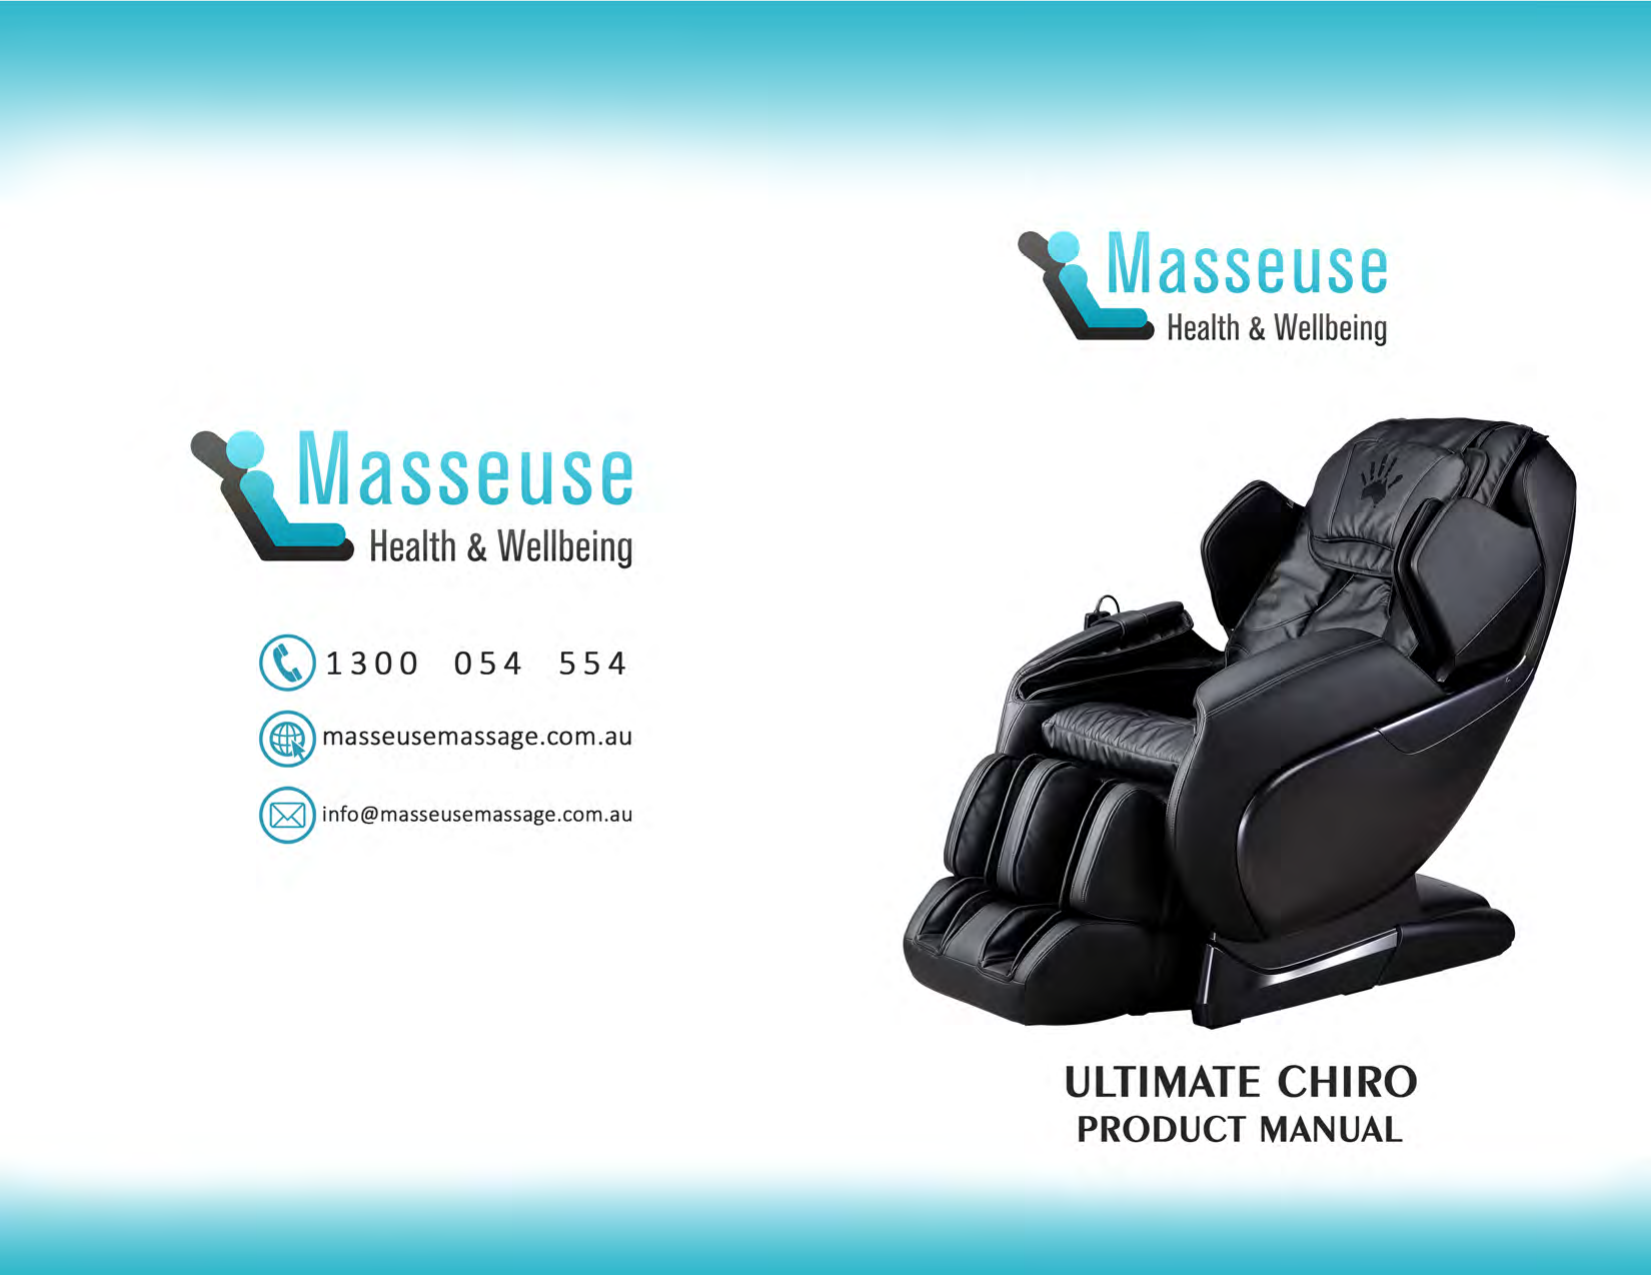 User Manual Massage